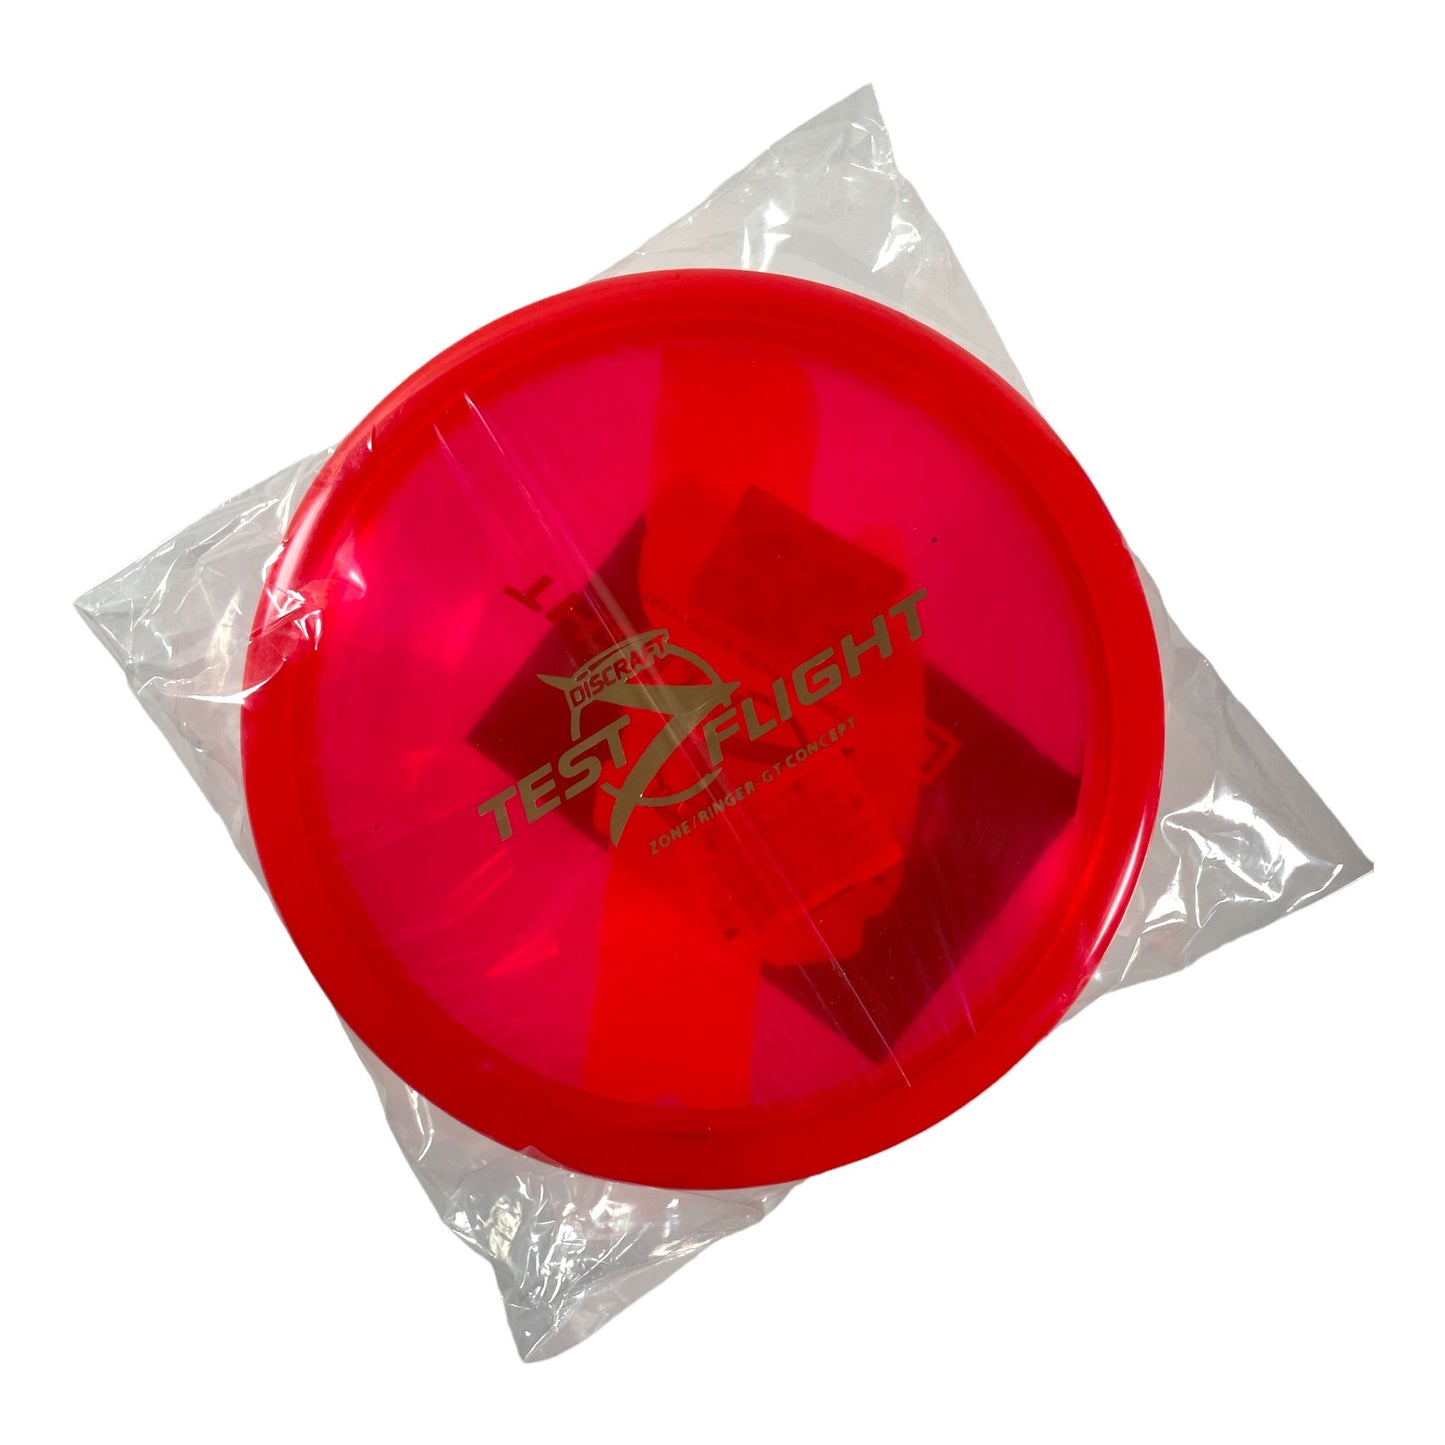 Discraft Zone GT Battle Pack | Red (Ringer) / Clear (Banger) 170-174g Disc Golf